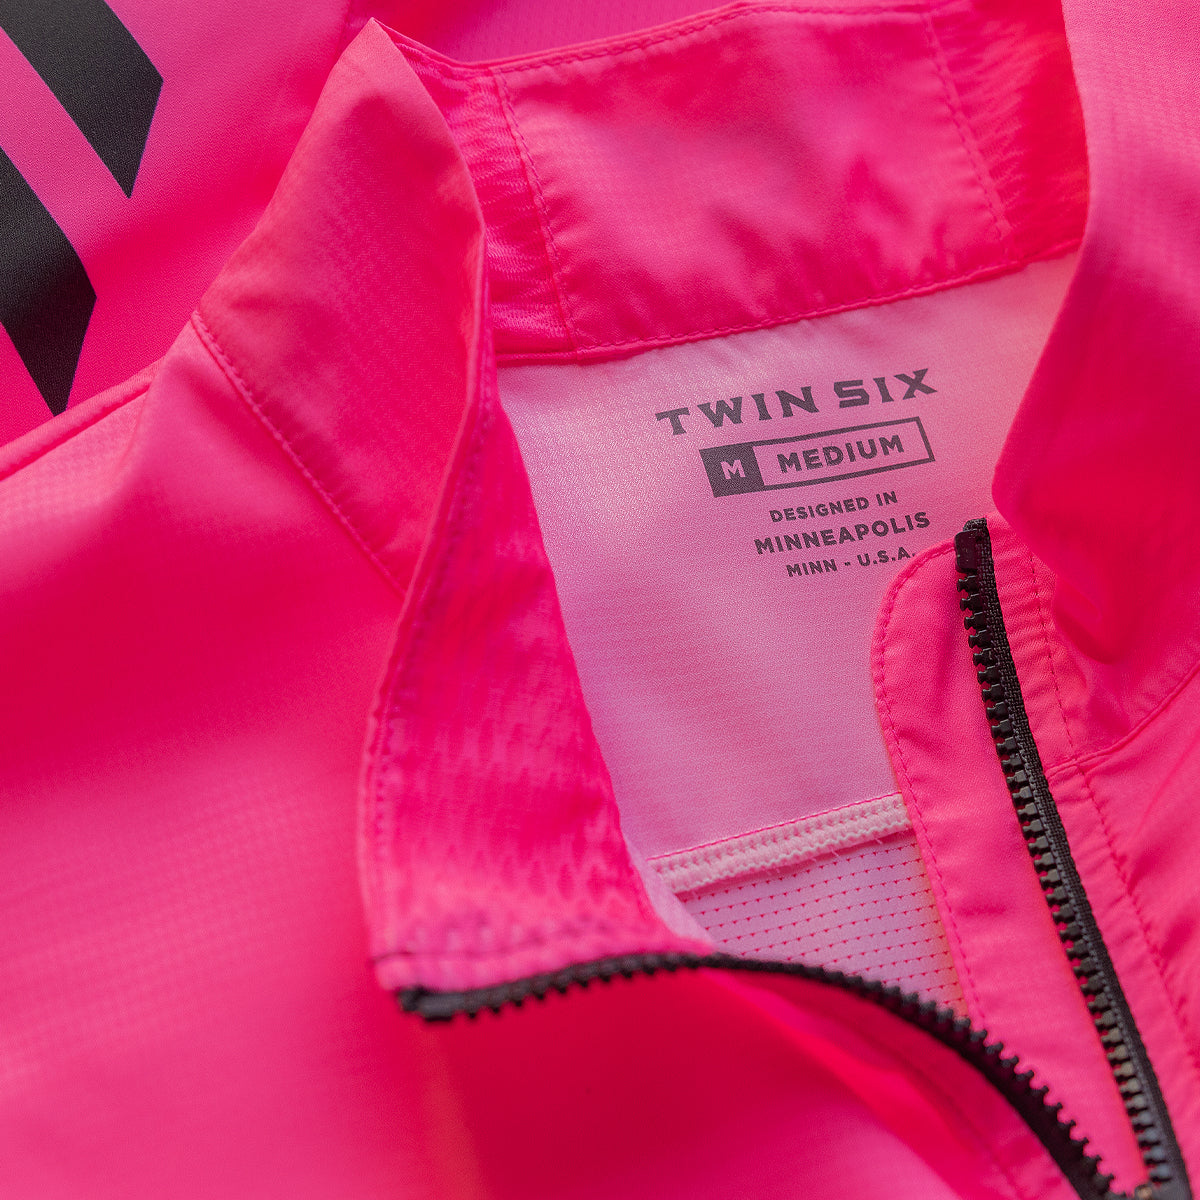 Standard Wind Jacket (Hot Pink)